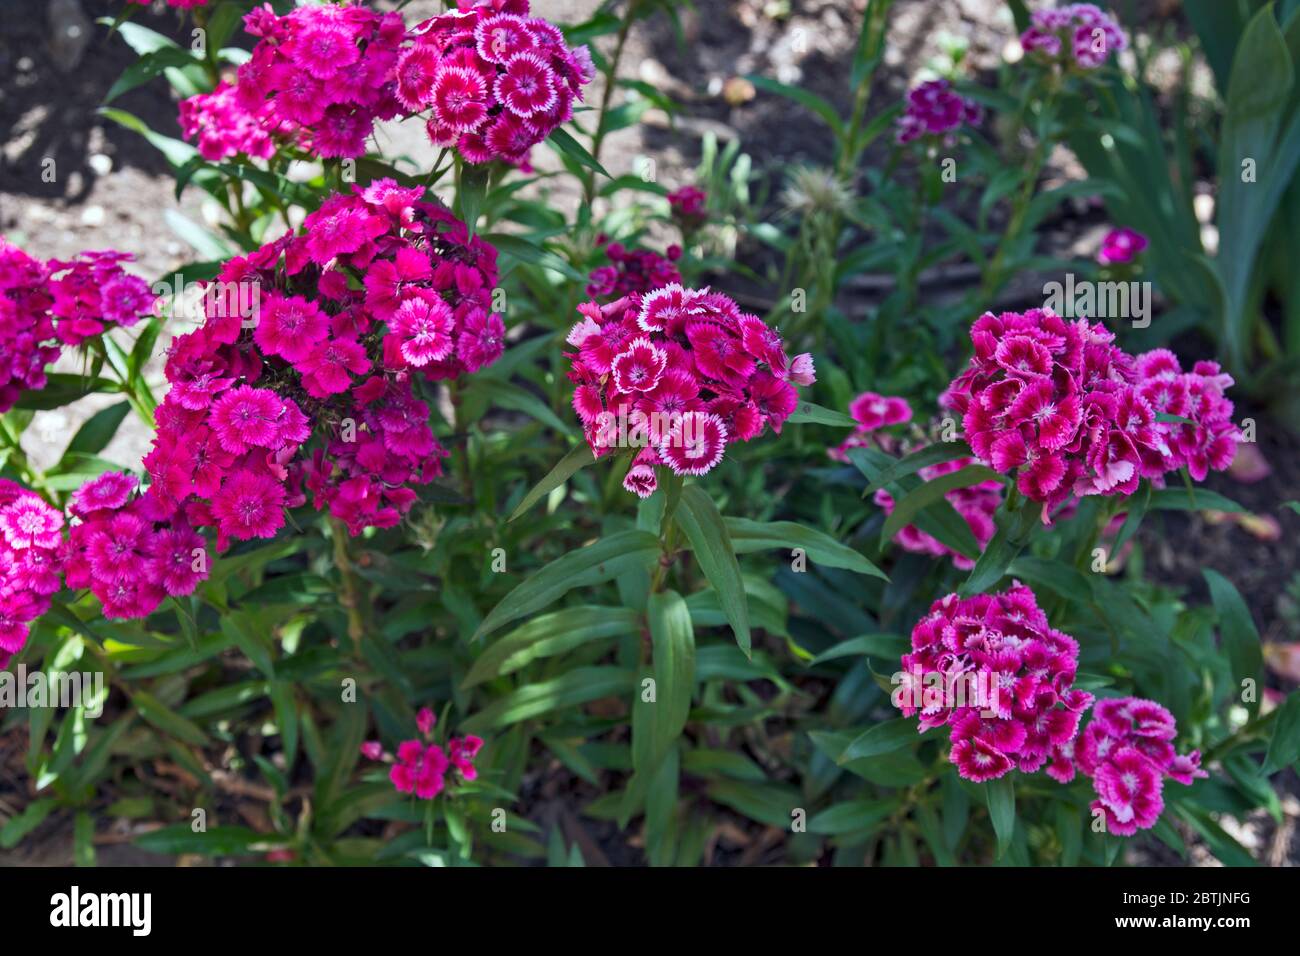 Beautiful and decorative Turkish carnation flowers adorn many flower gardens. Stock Photo